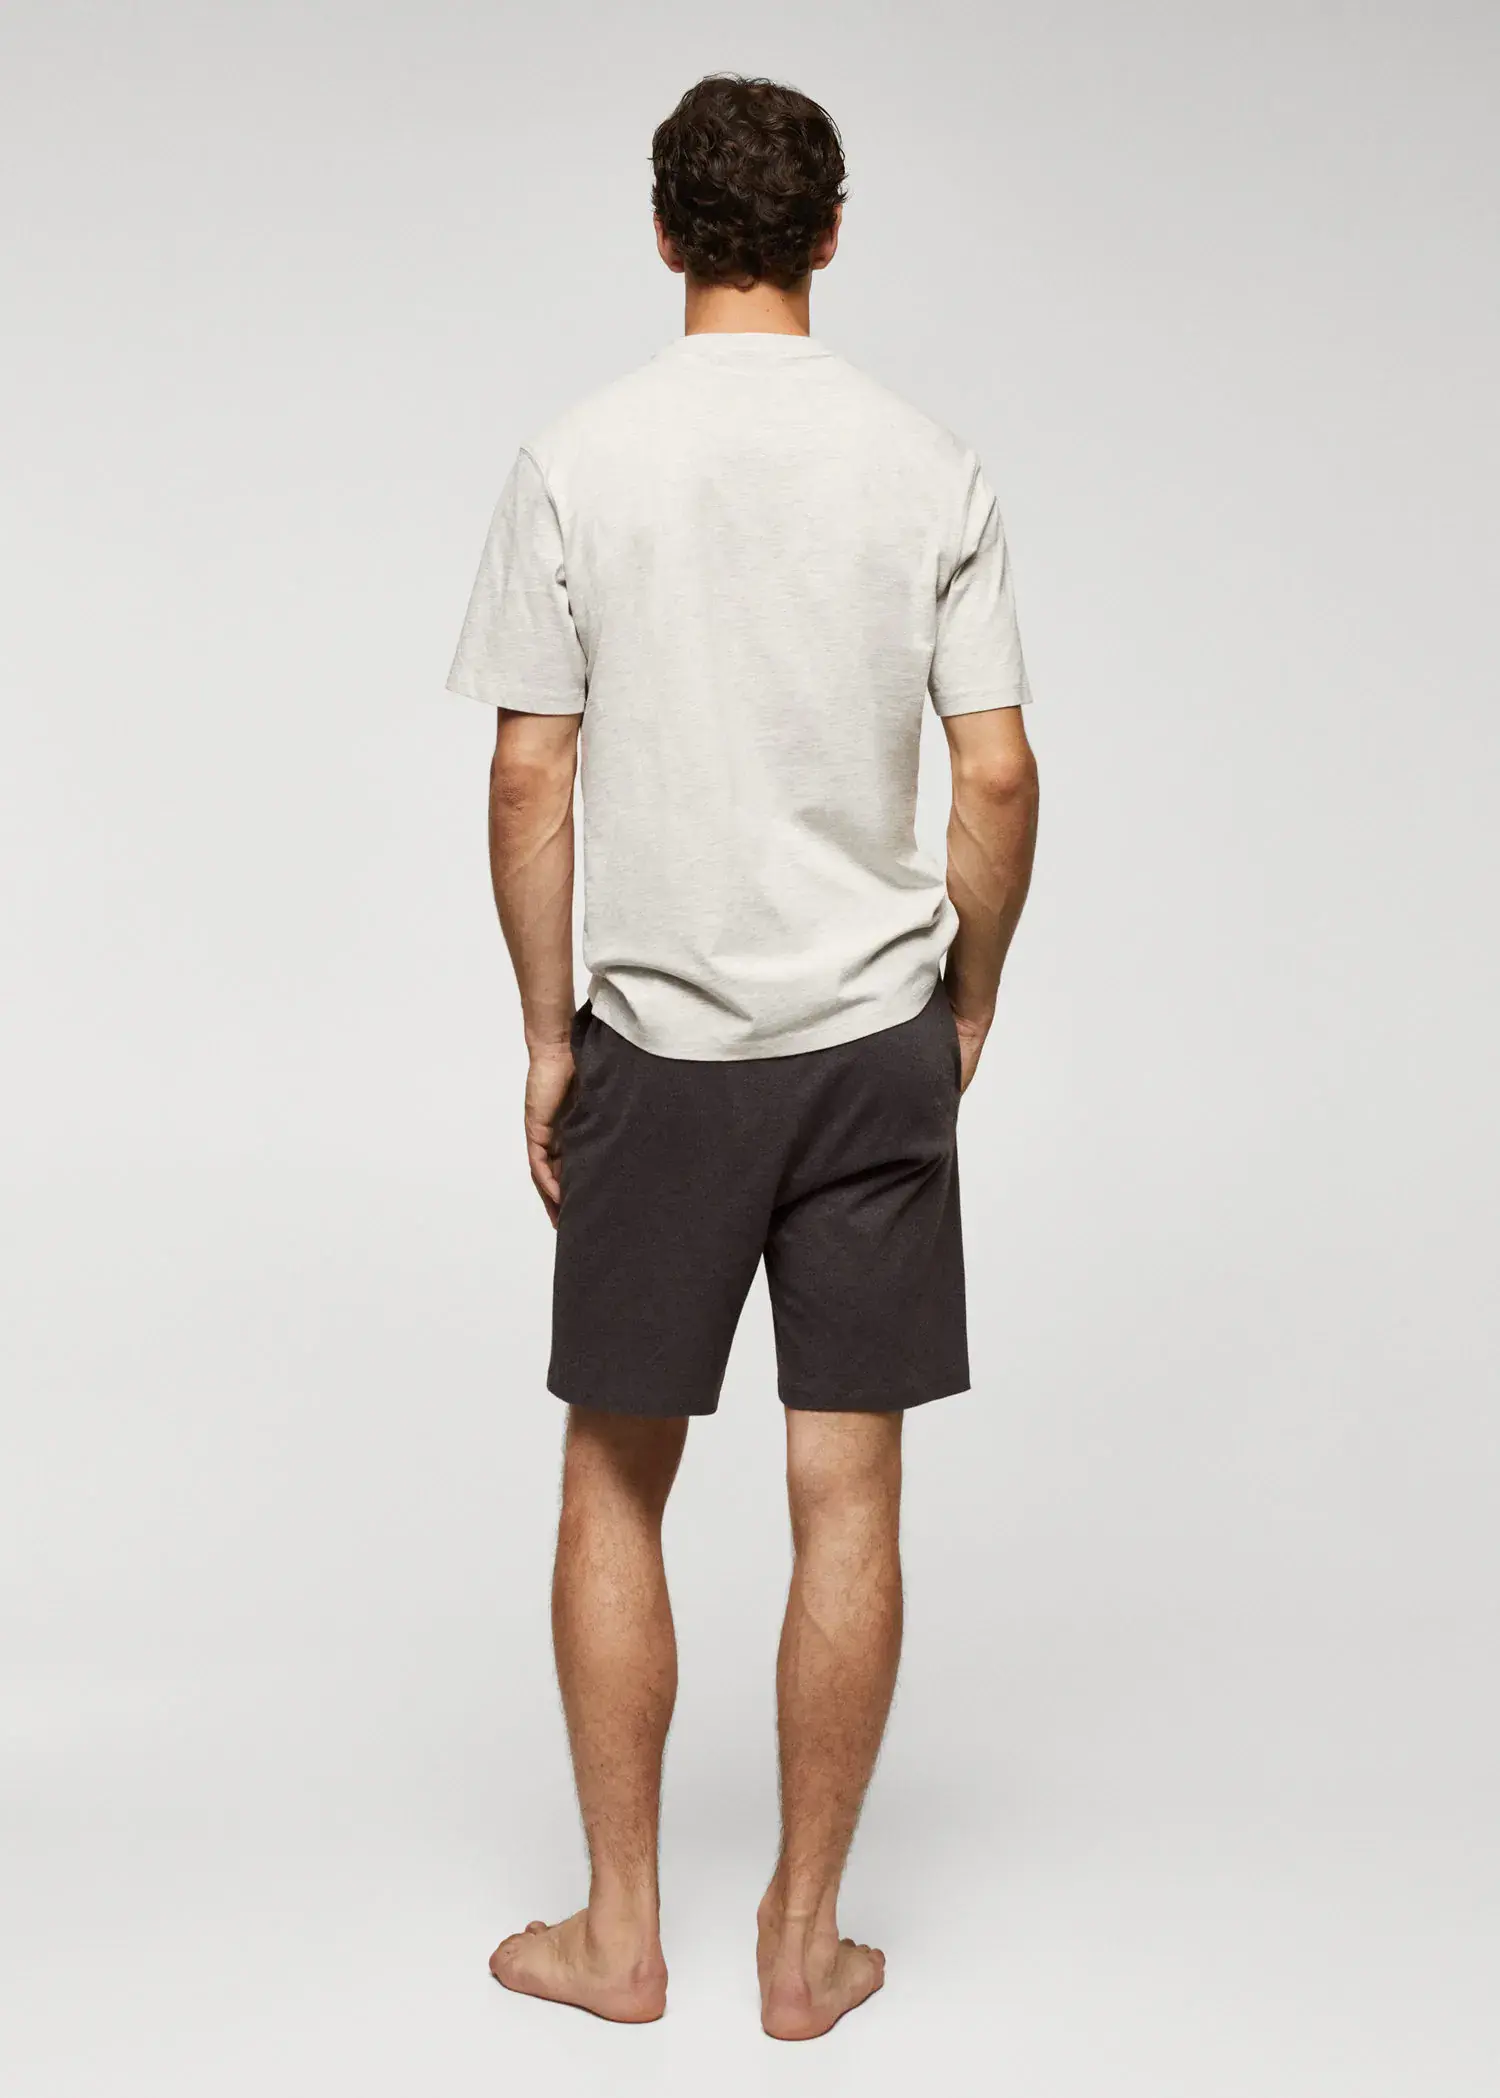 Mango Cotton pajama shorts pack. a man wearing a white shirt and black shorts. 